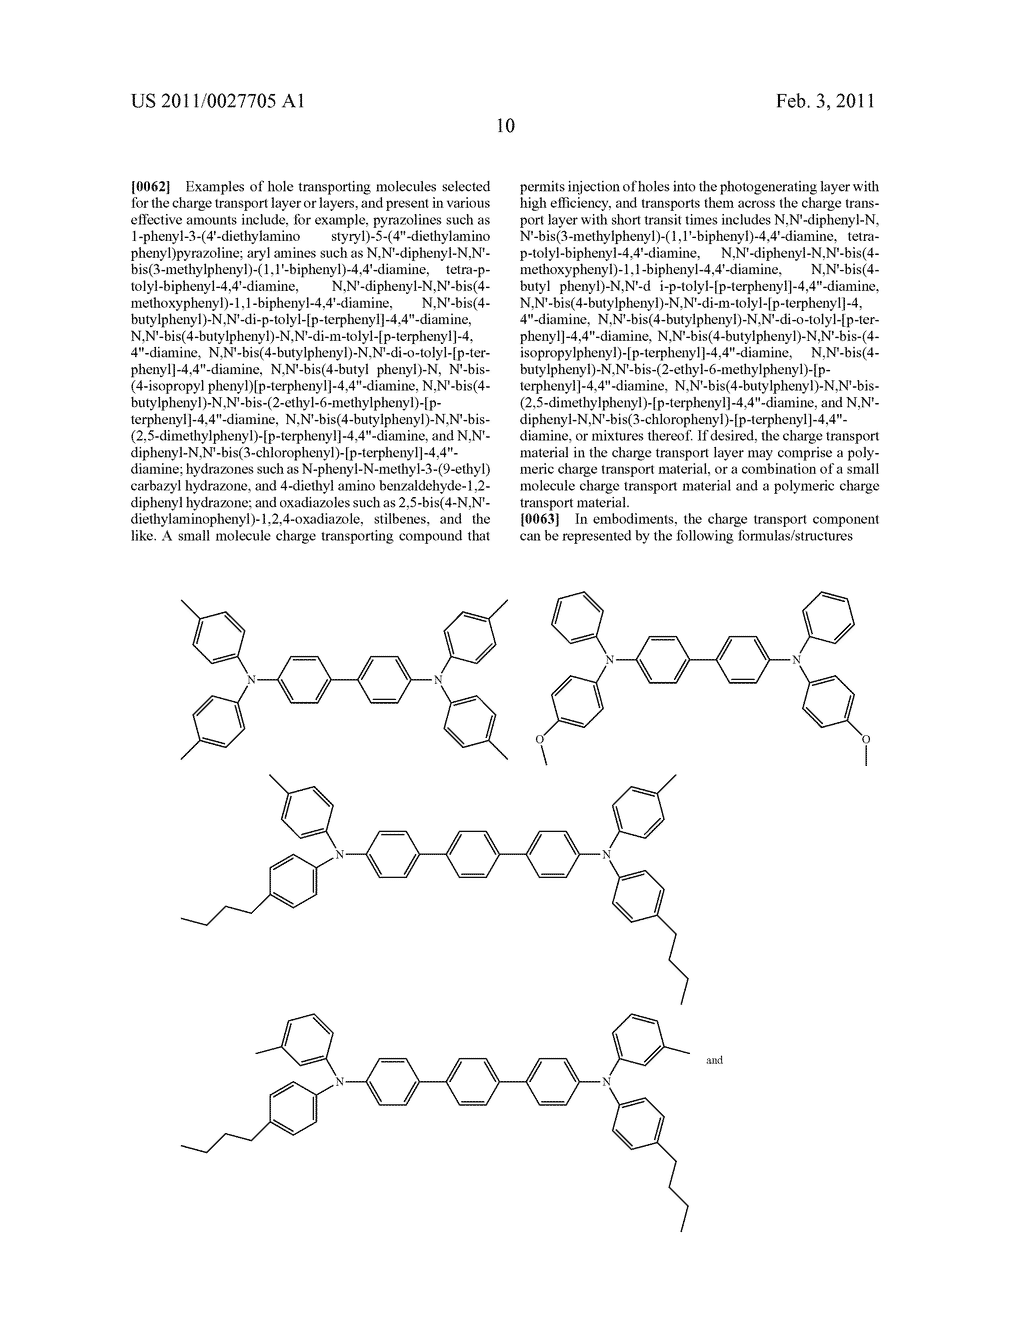 EPOXYSILANE HOLE BLOCKING LAYER PHOTOCONDUCTORS - diagram, schematic, and image 11